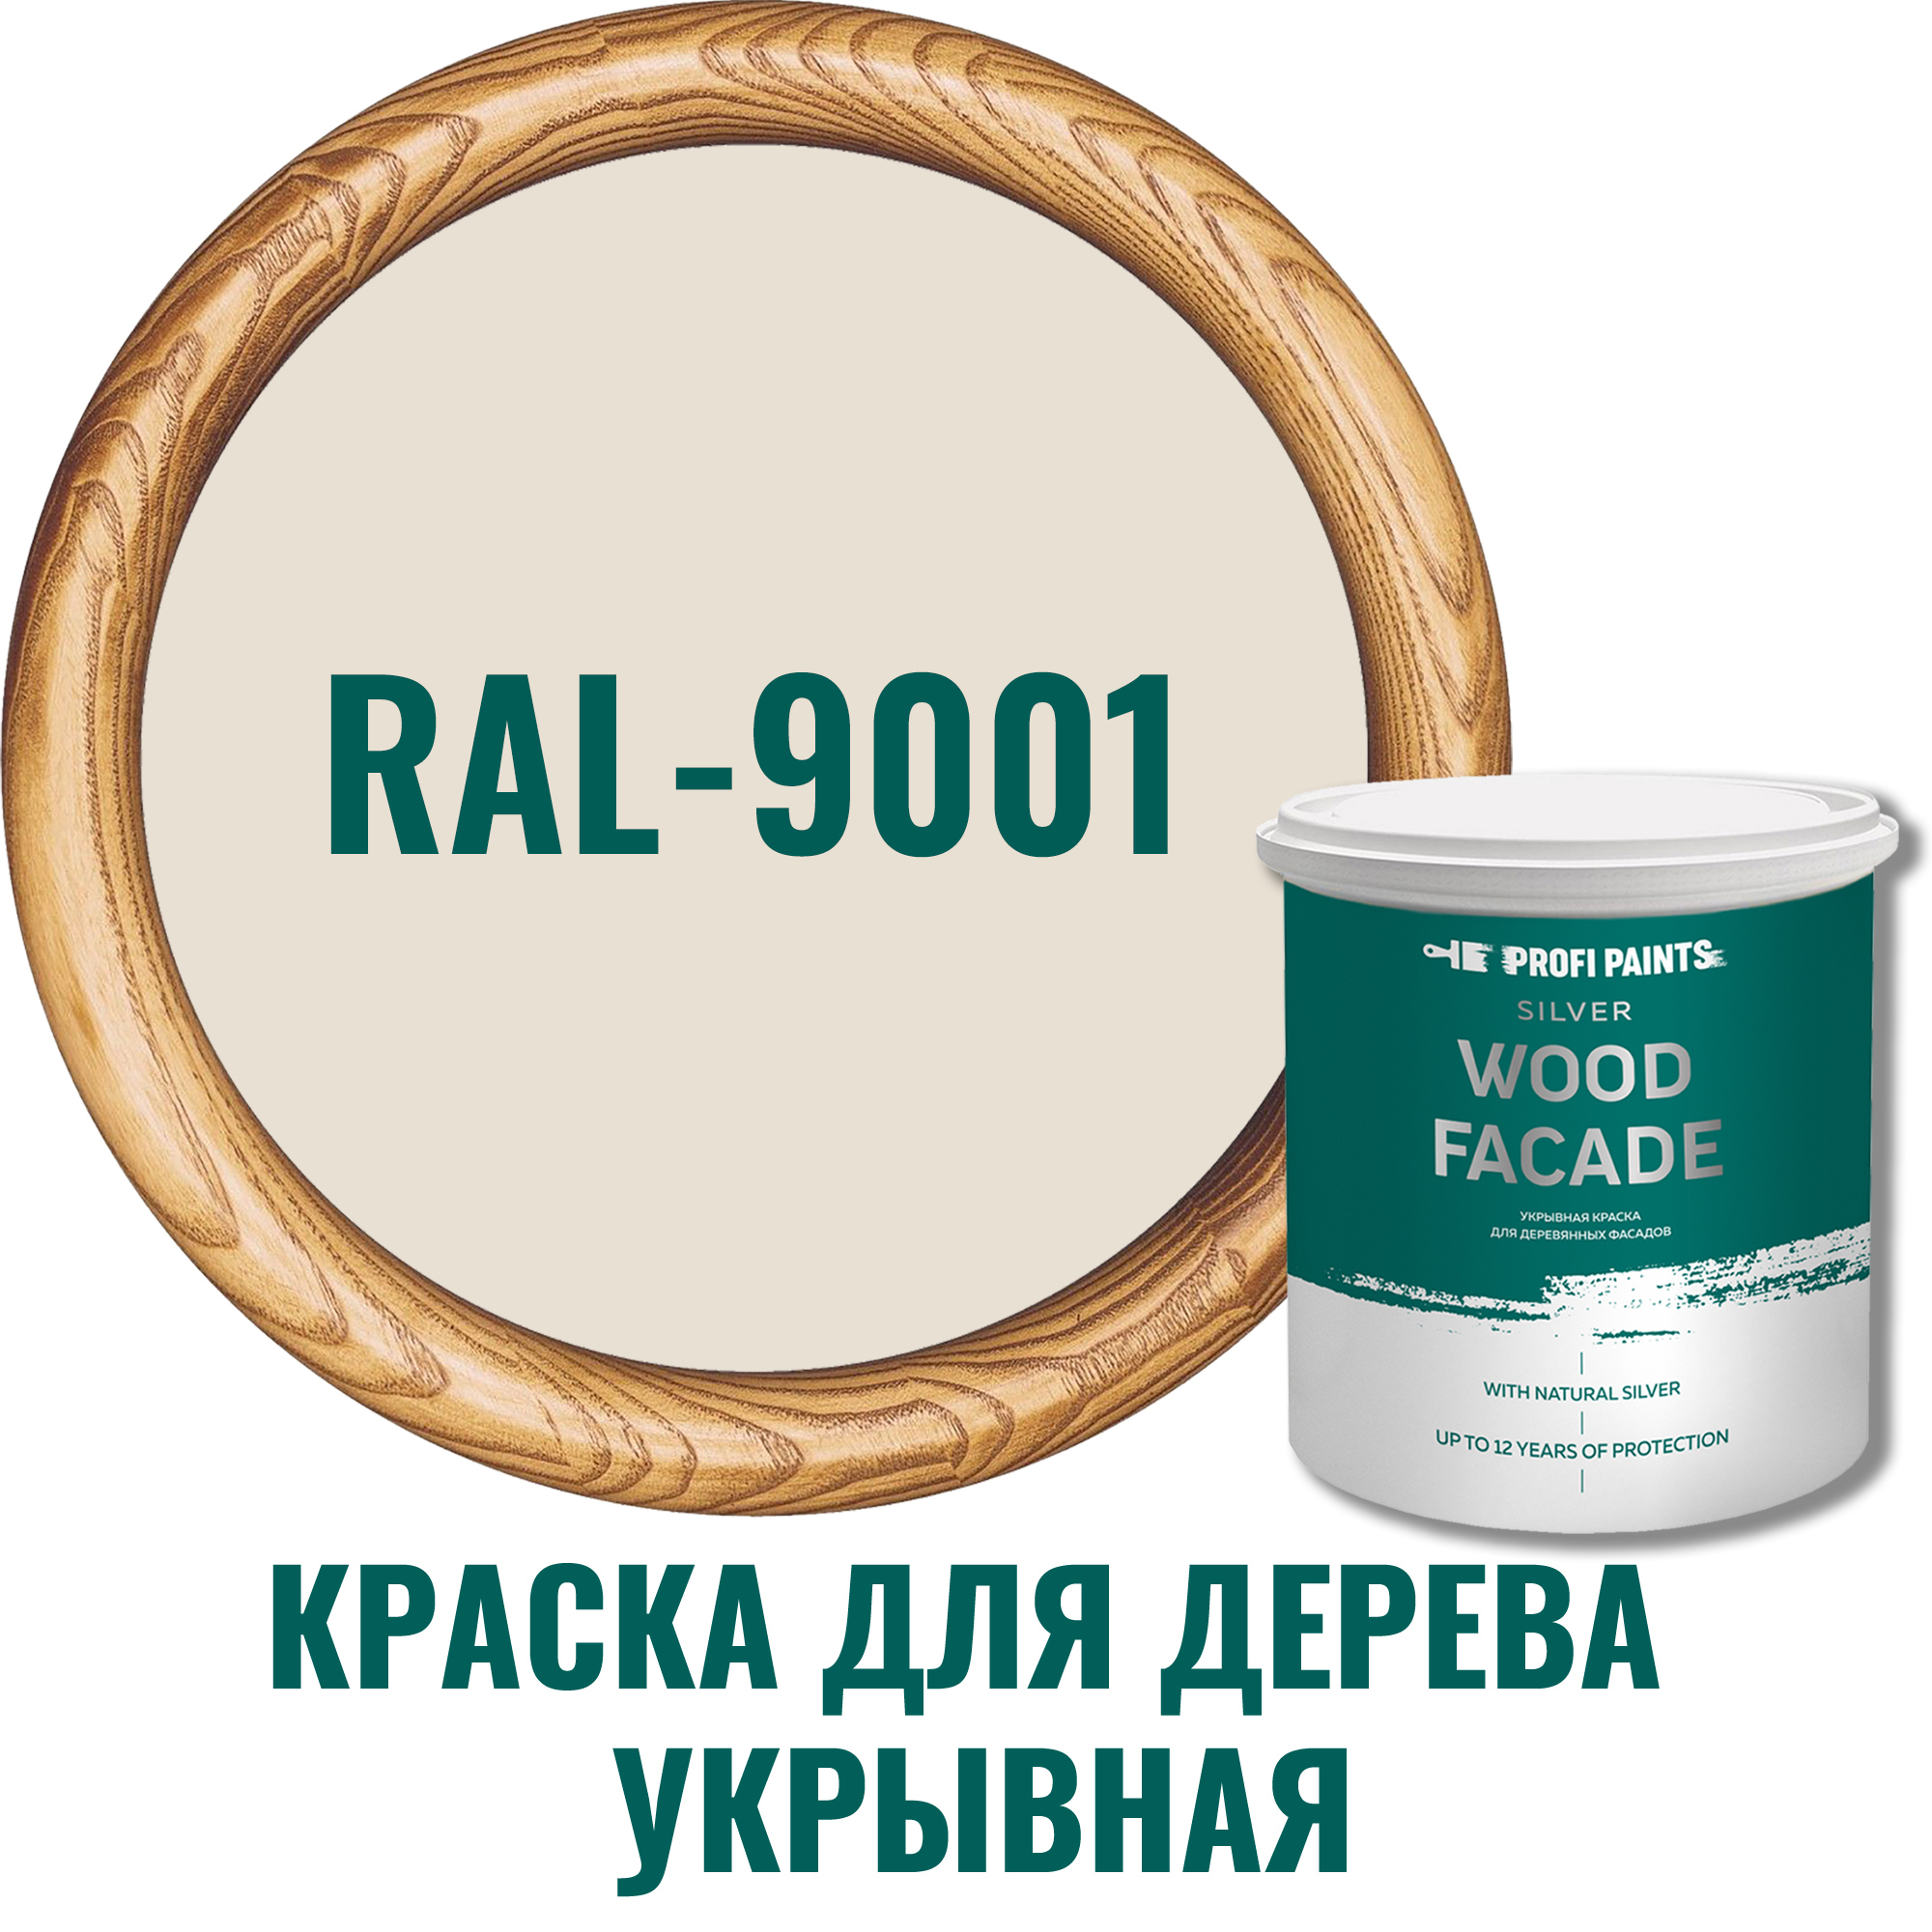 91106651 Краска для дерева 11292_D SILVER WOOD FASADE цвет RAL-9001 светло-кремовый 2.7 л STLM-0487642 PROFIPAINTS